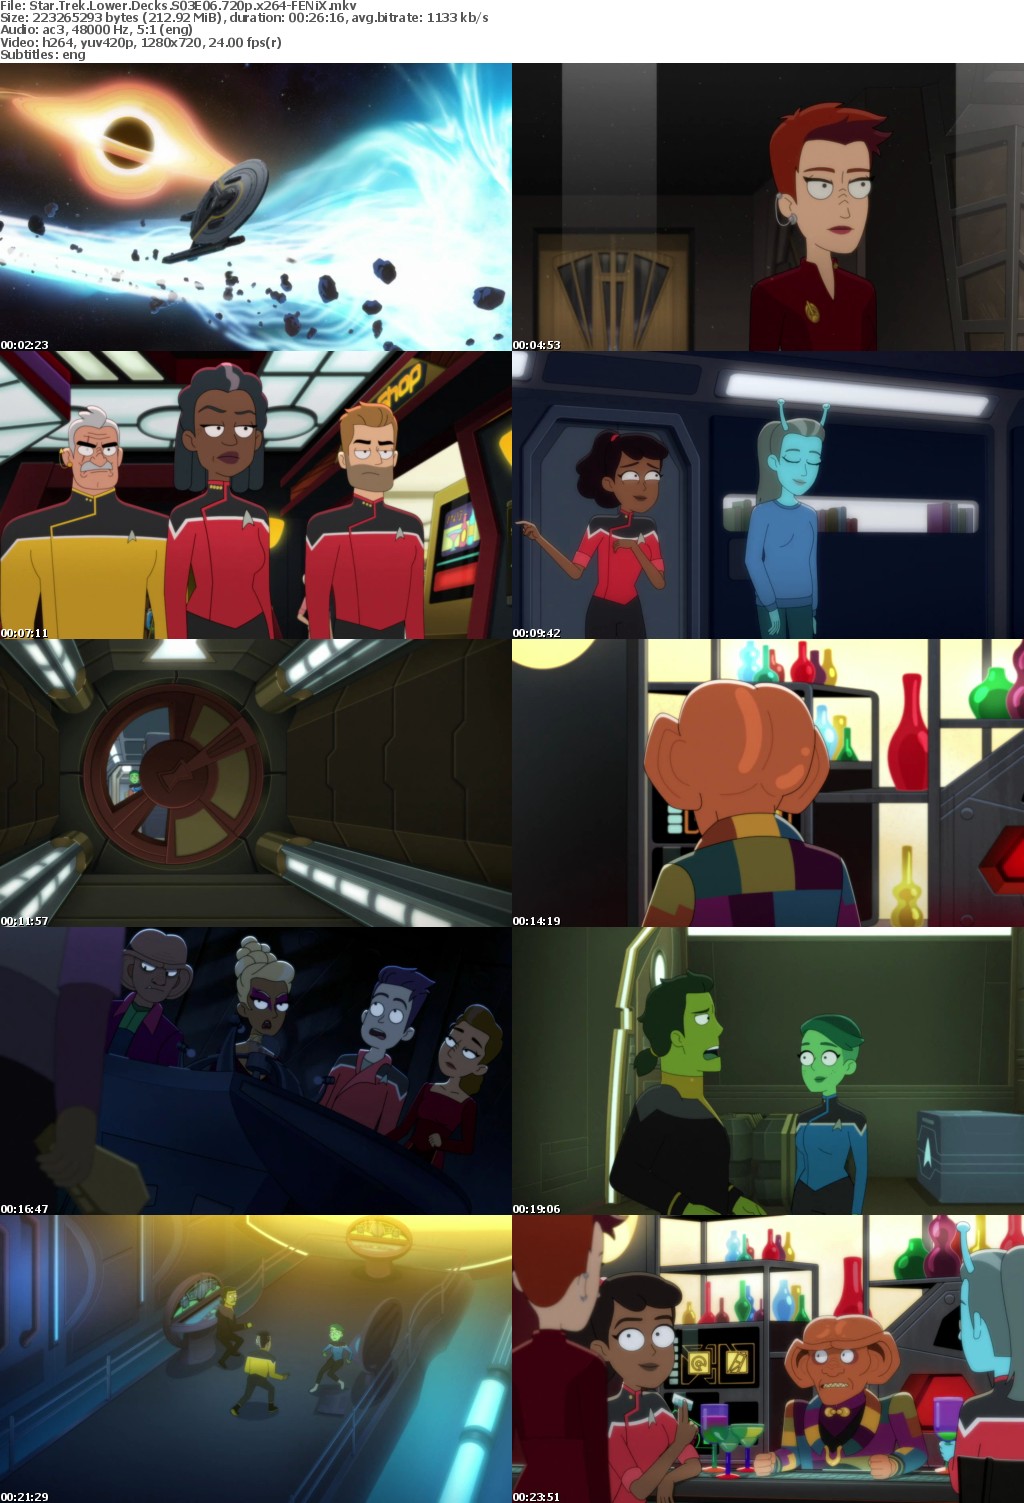 Star Trek Lower Decks S03E06 720p x264-FENiX